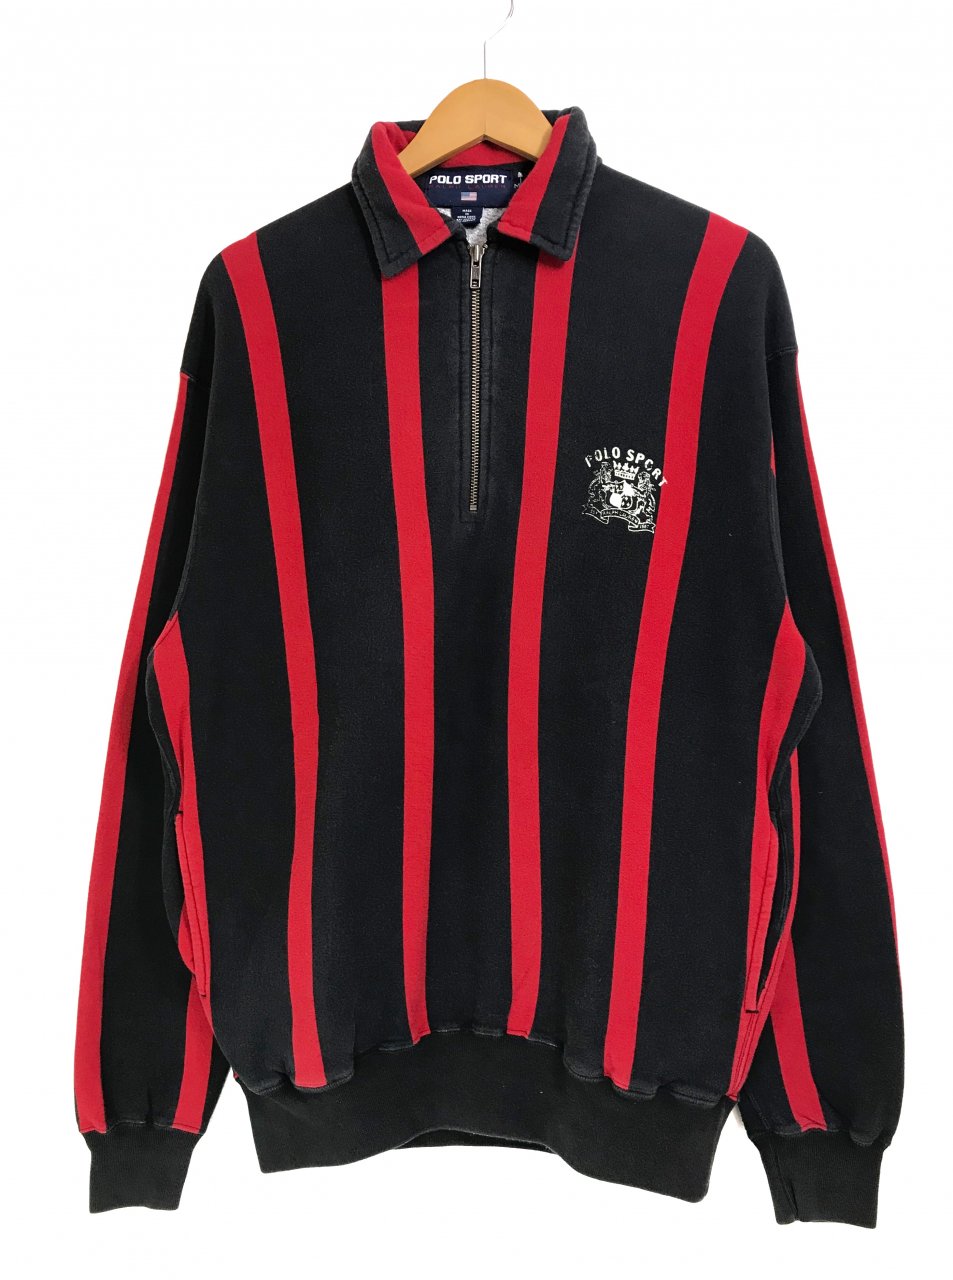 90s POLO SPORT Stripe Half-Zip Sweatshirt 黒赤 M ポロスポーツ